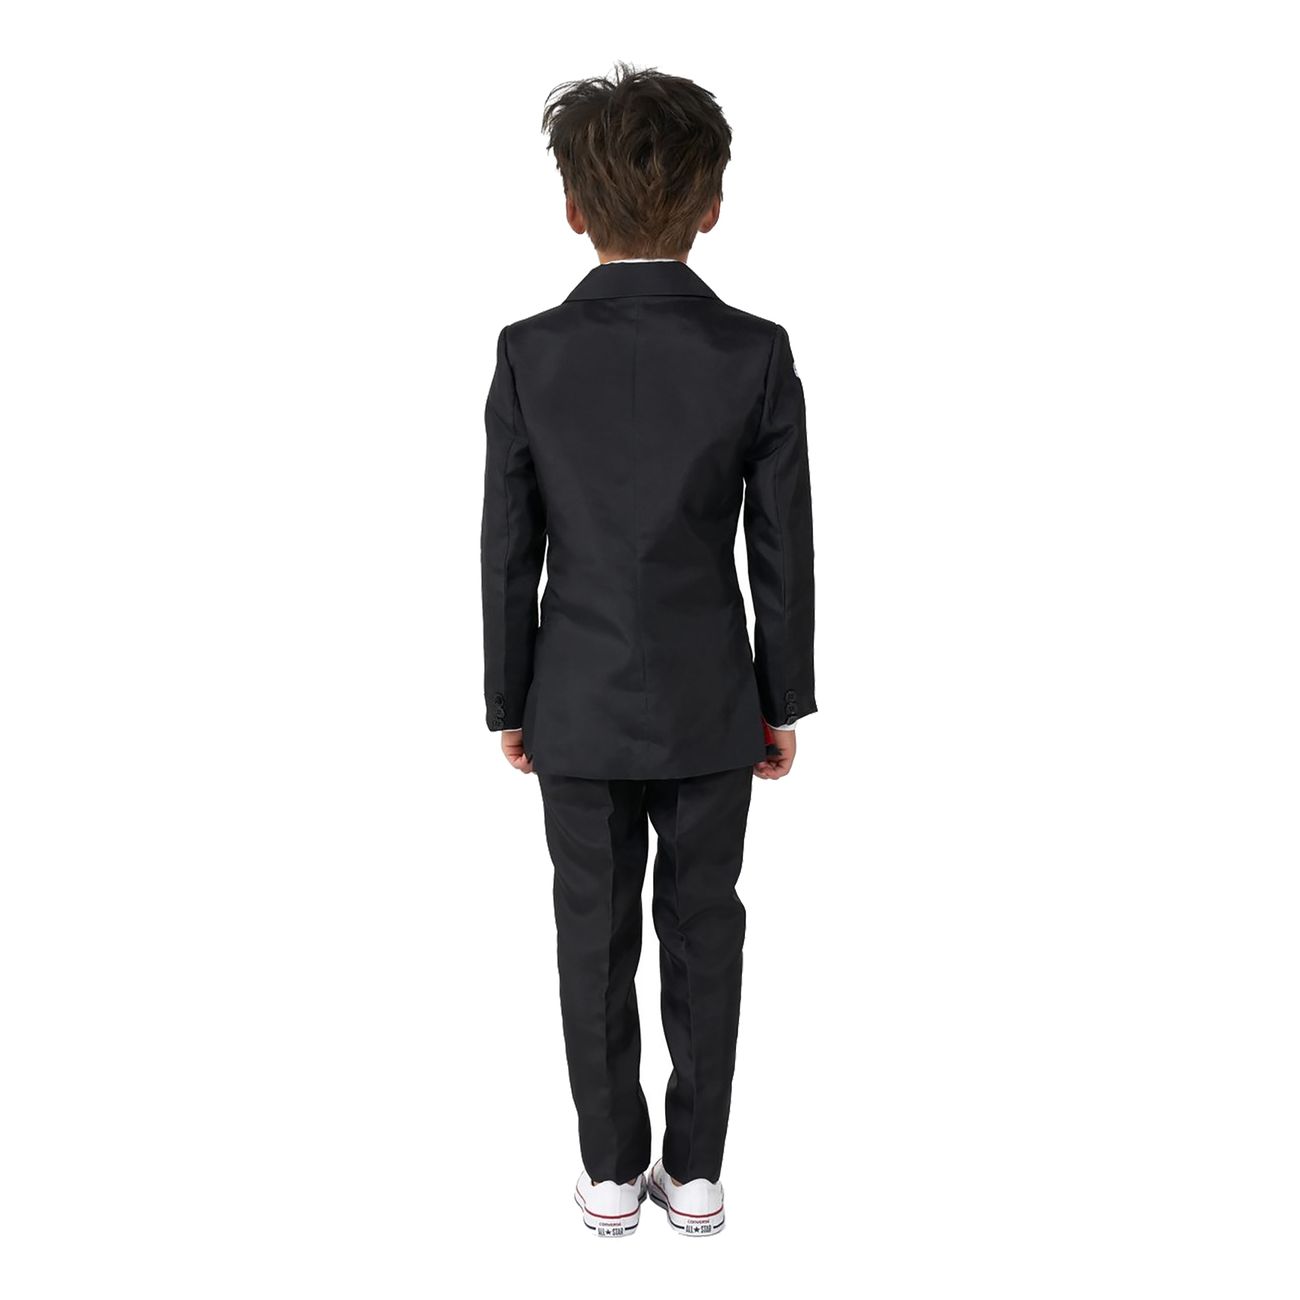 suitmeister-boys-skeleton-grunge-black-kostym-88956-2